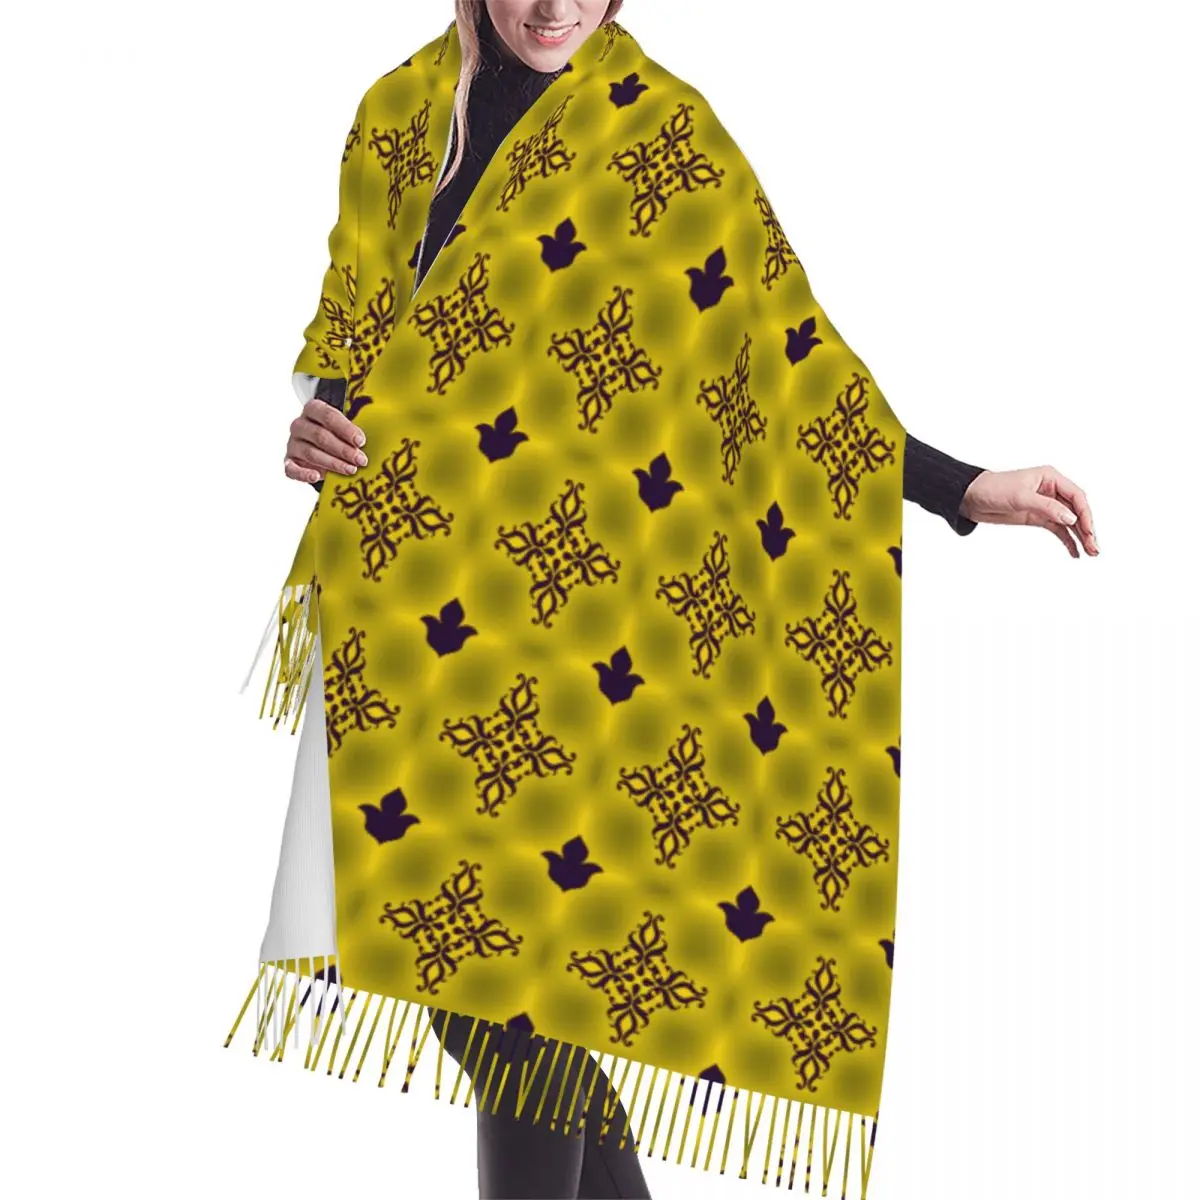 

Printed Multicolor Pattern In The Arabian Style Scarf Women Men Winter Warm Fashion Luxury Versatile Scarves Shawls Wraps